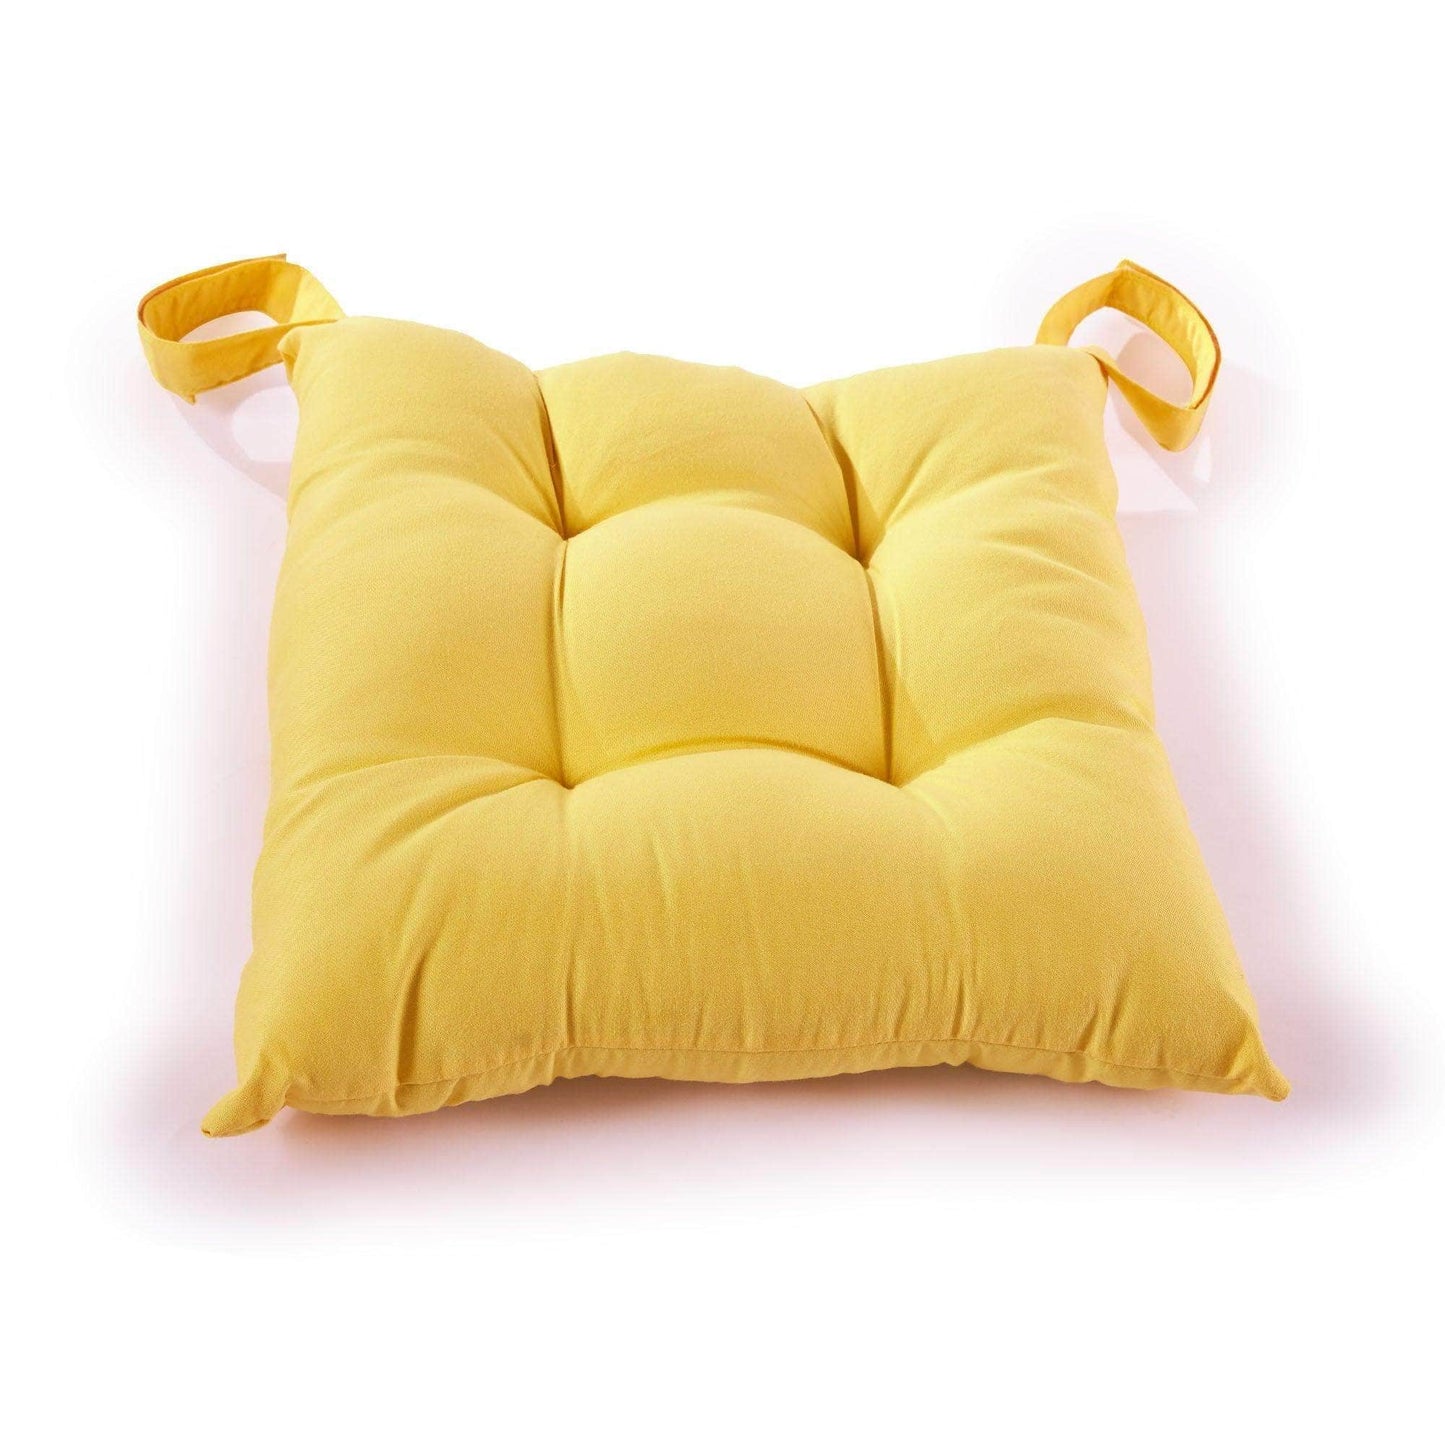 Penguin Group Cushions Yellow Fiber Square Cushion 35 cm2